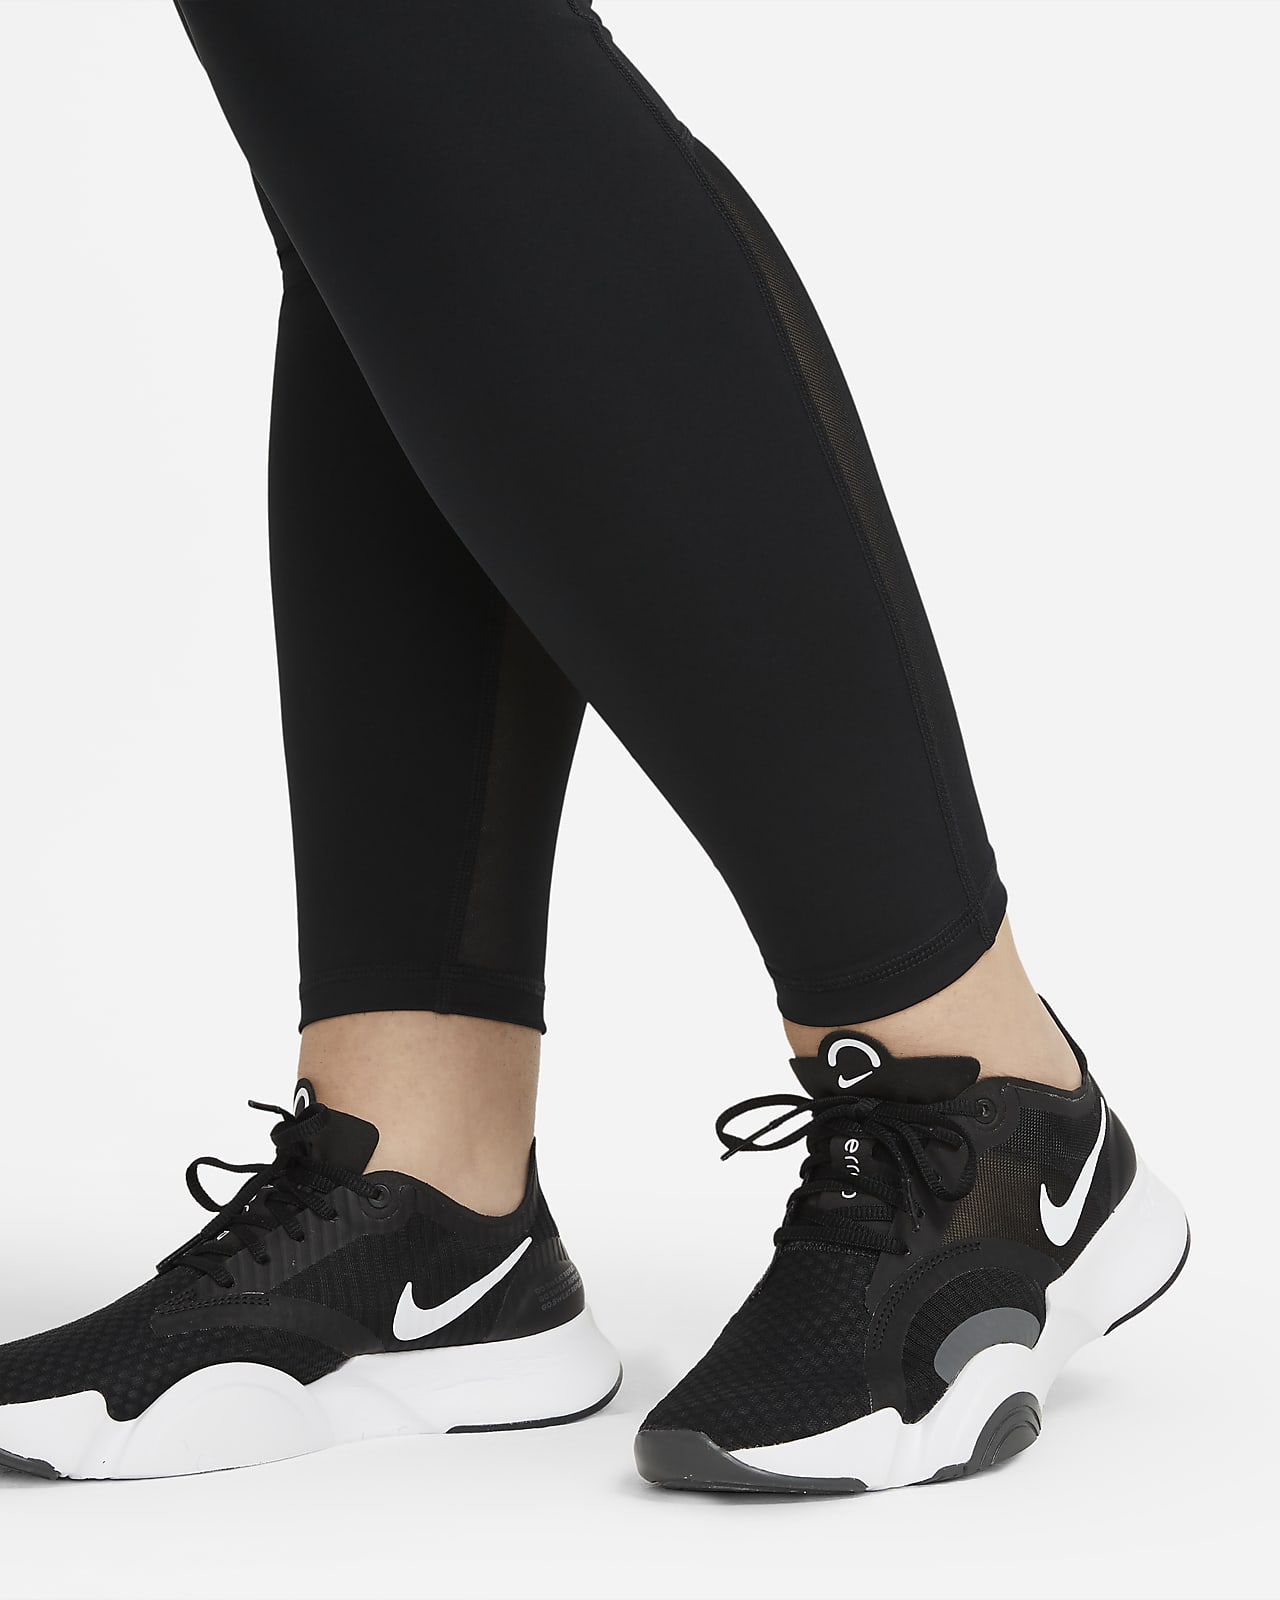 Plus Size Leggings. Nike IN